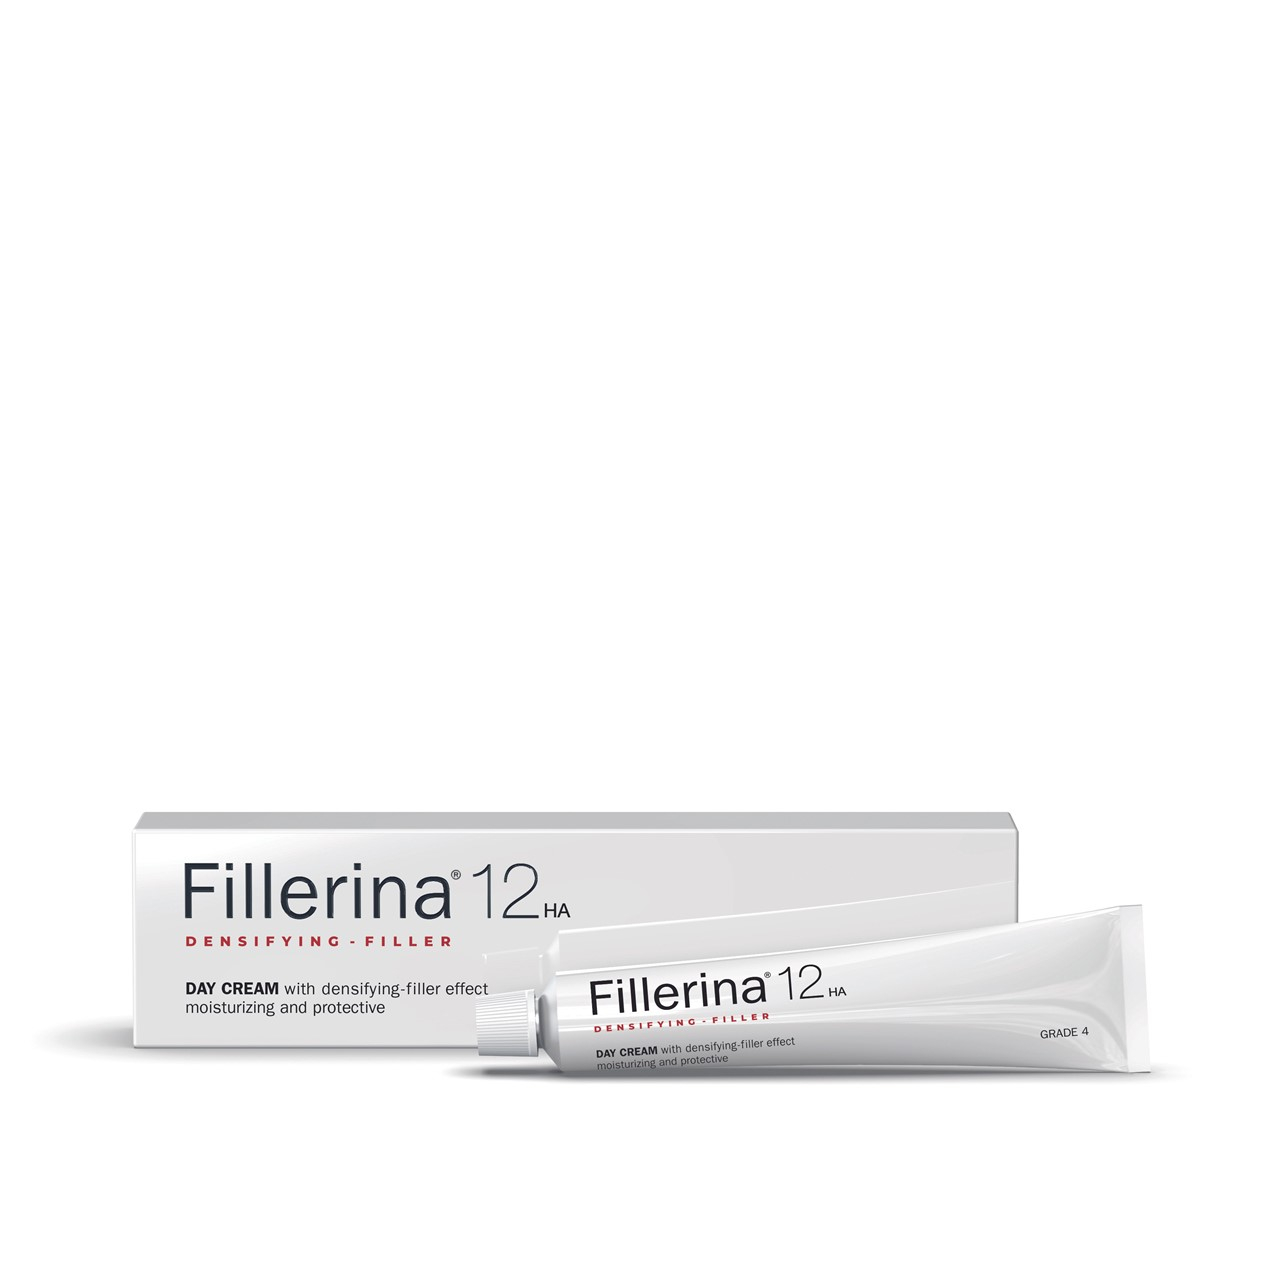 Fillerina 12HA Densifying-Filler Day Cream Grade 4 50ml (1.69fl oz)